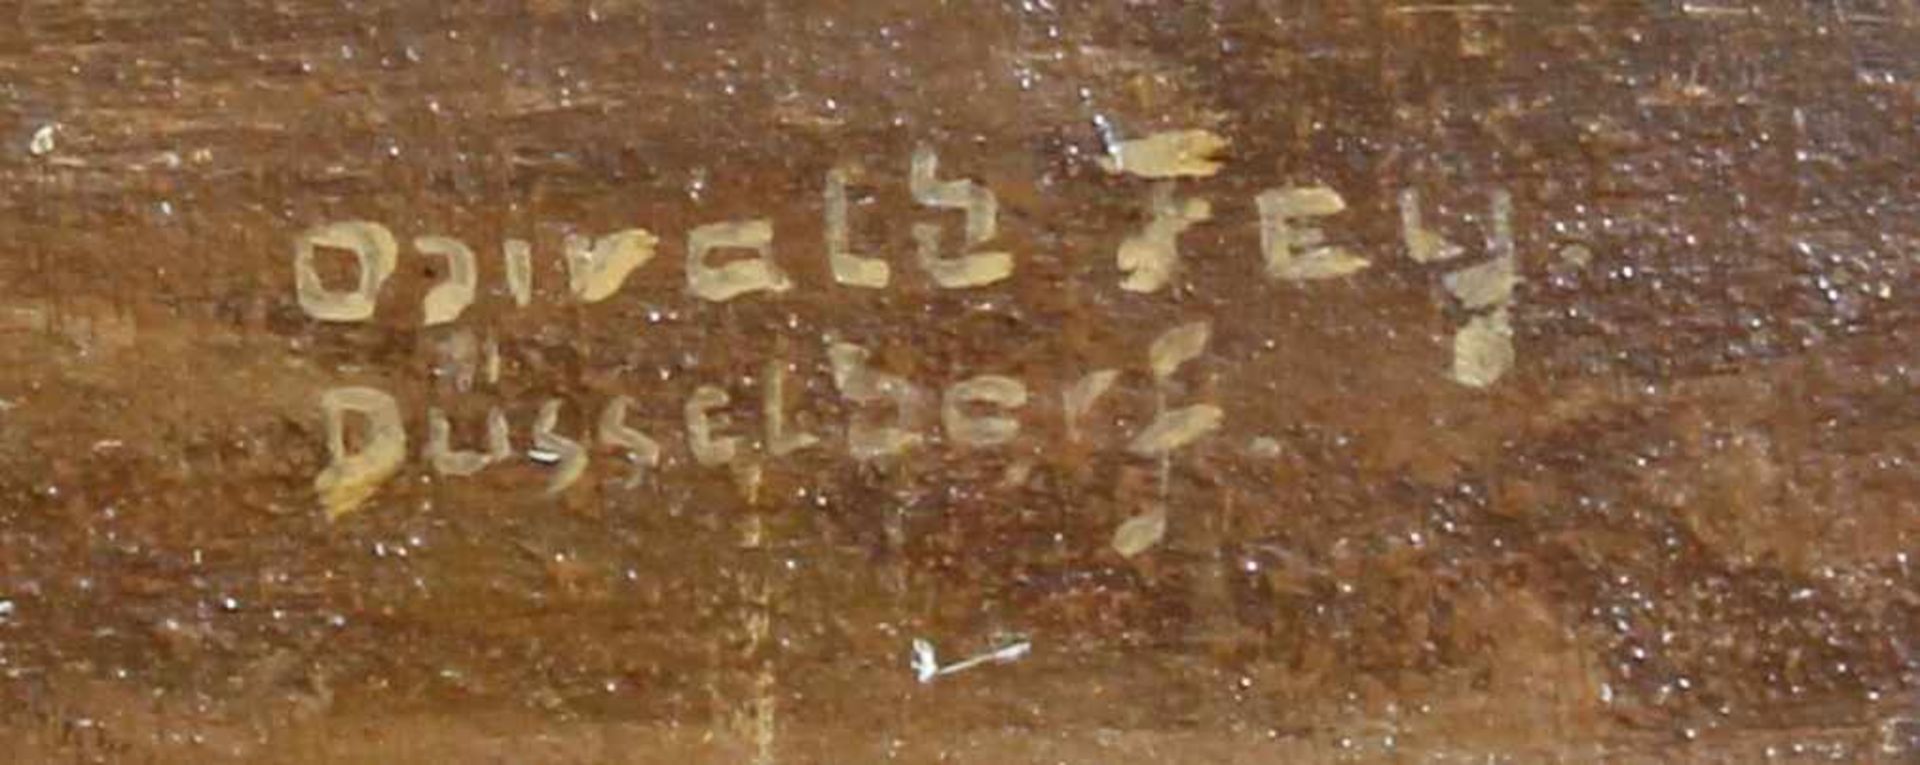 Fey, Oswald (19./20. Jh.), "Stadt am Kanal", Öl auf Leinwand, signiert unten rechts Oswald Fey - Bild 3 aus 4